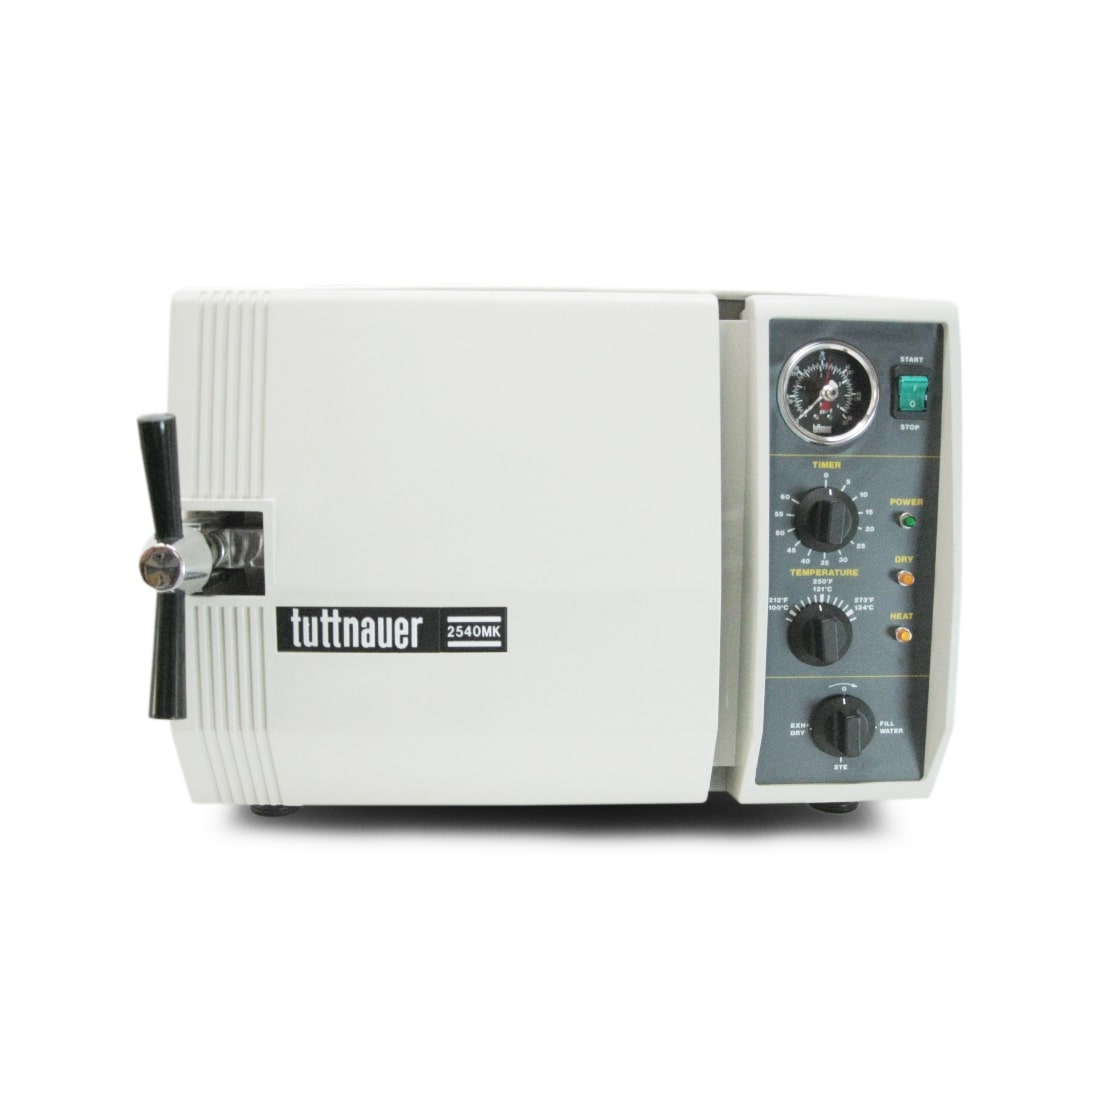 Tuttnauer 2540MK - Autoclave Manual Sterilizer